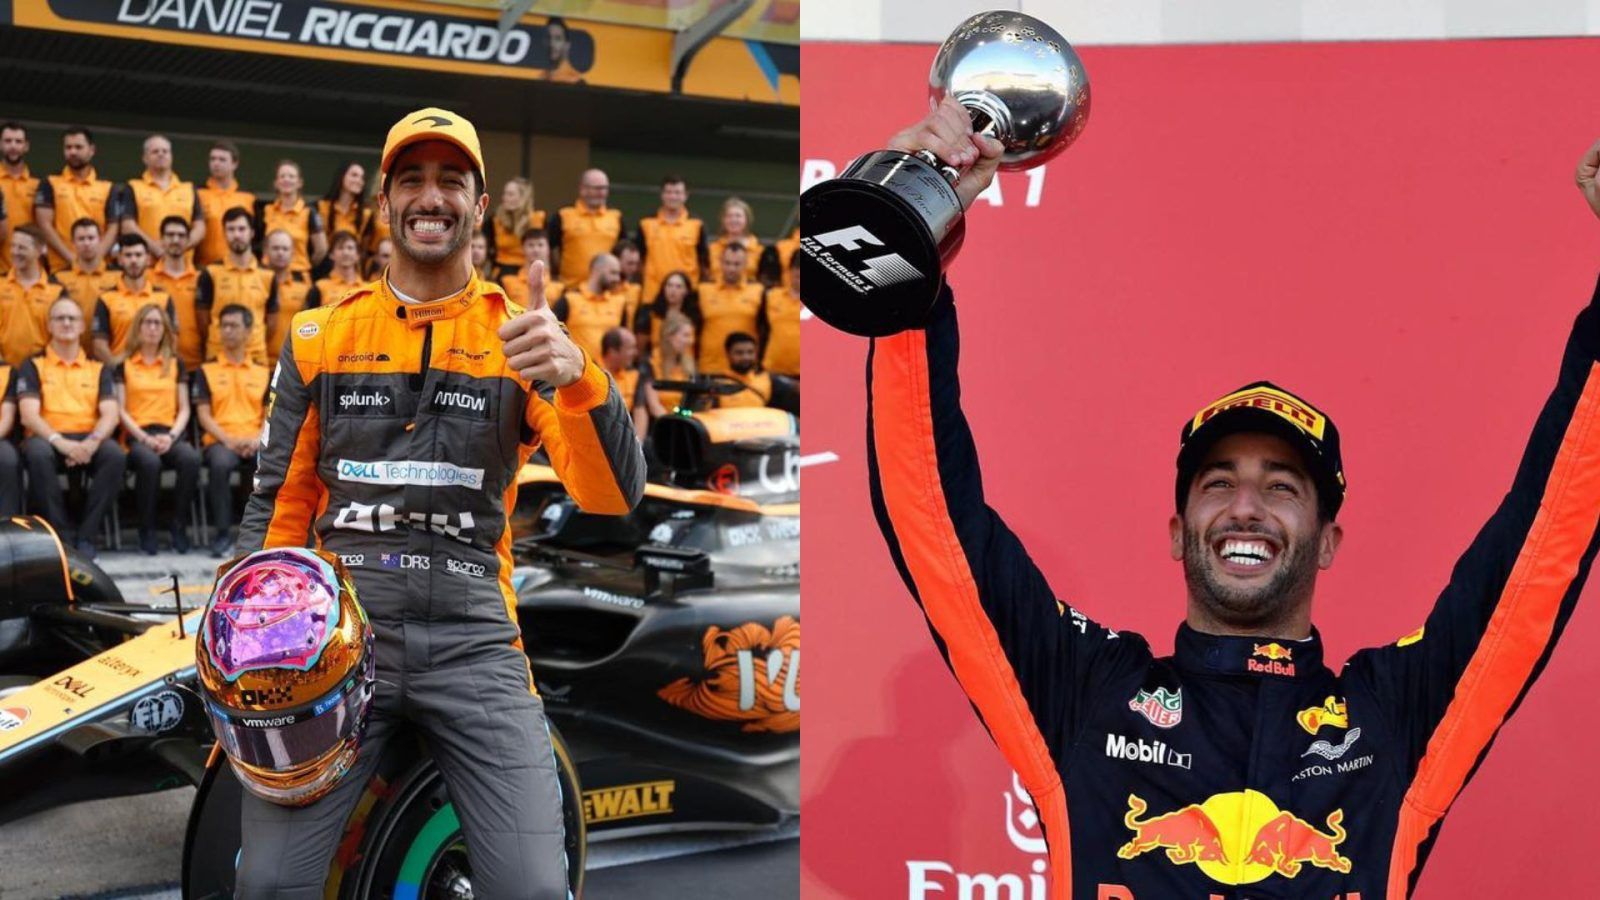 Daniel Ricciardo Net Worth His Career Highlights, Salary And More